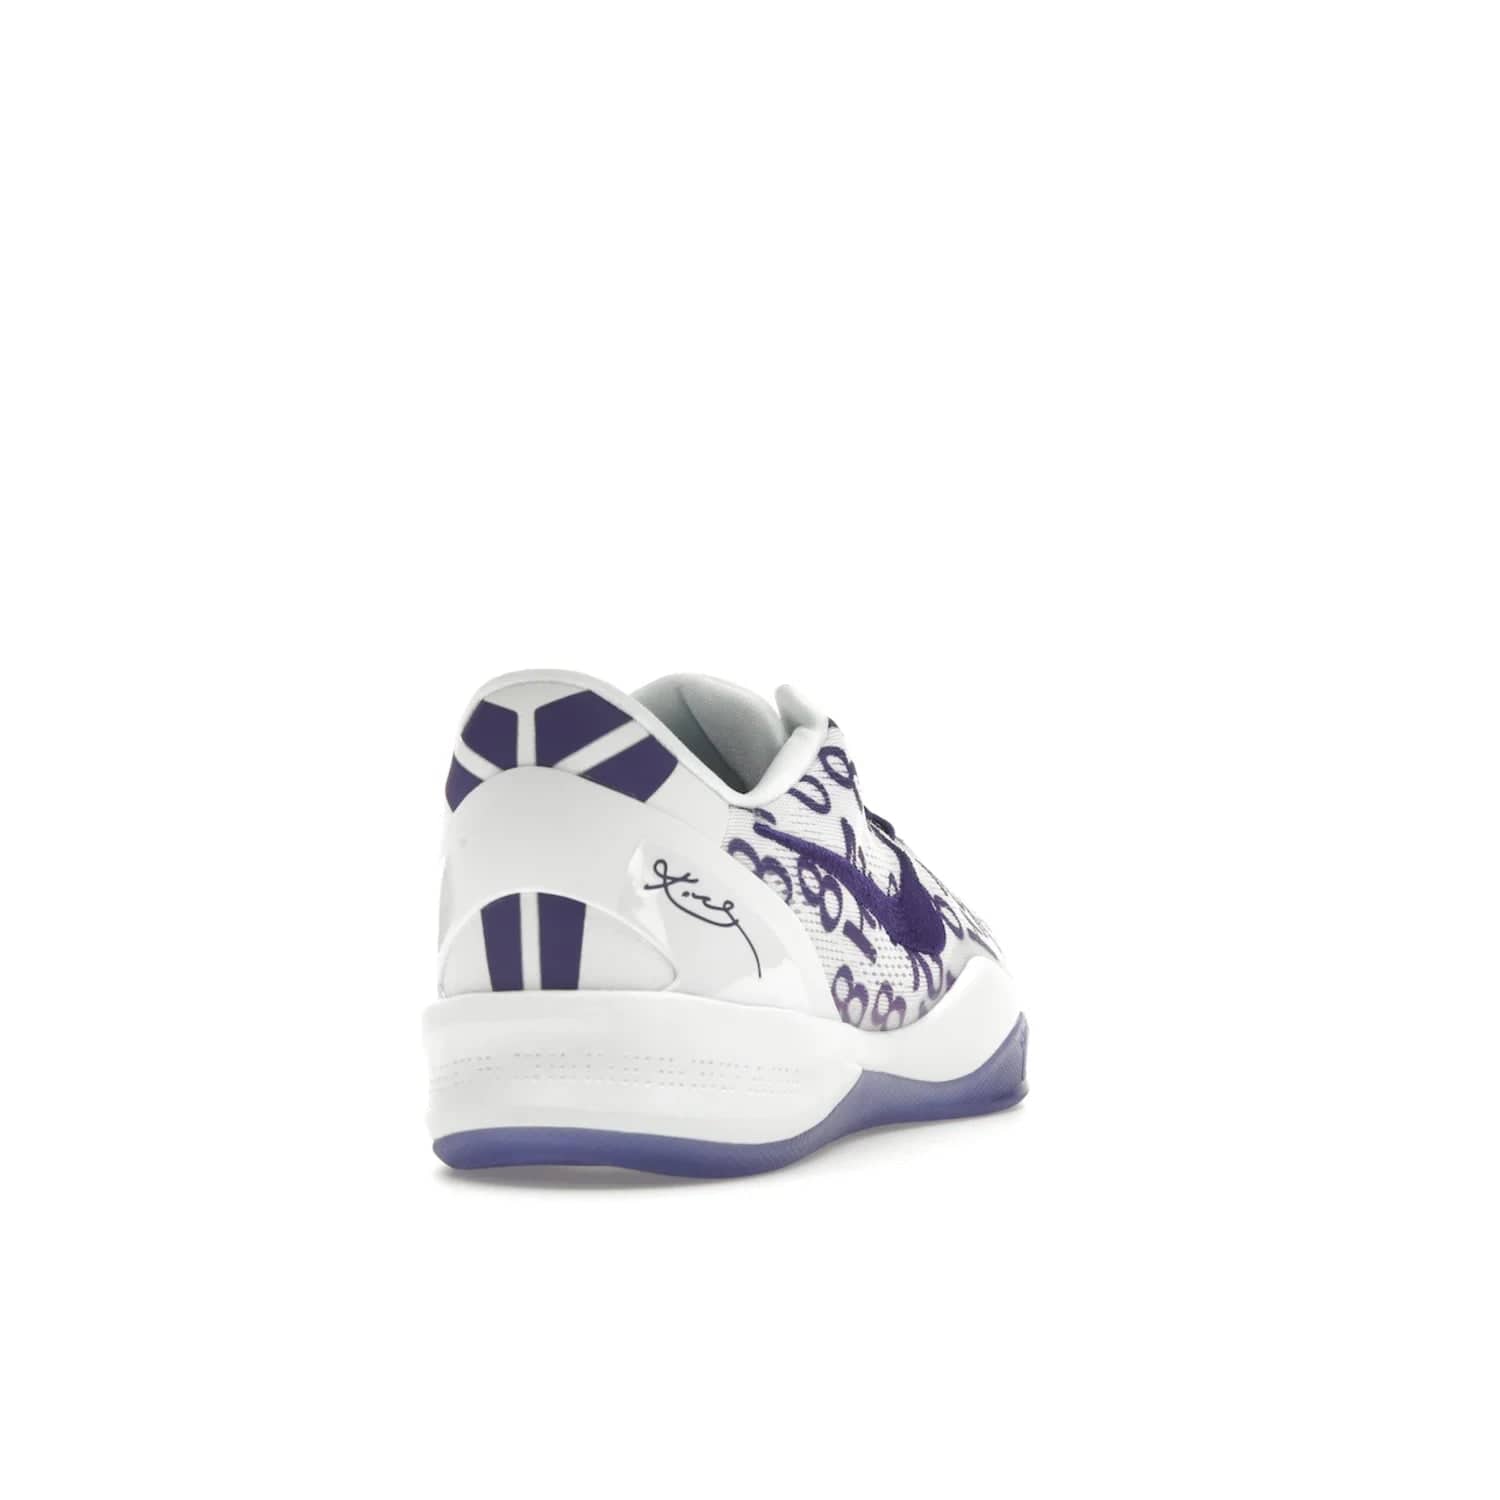 Nike Kobe 8 Protro Court Purple - Image 30 - Only at www.BallersClubKickz.com - 